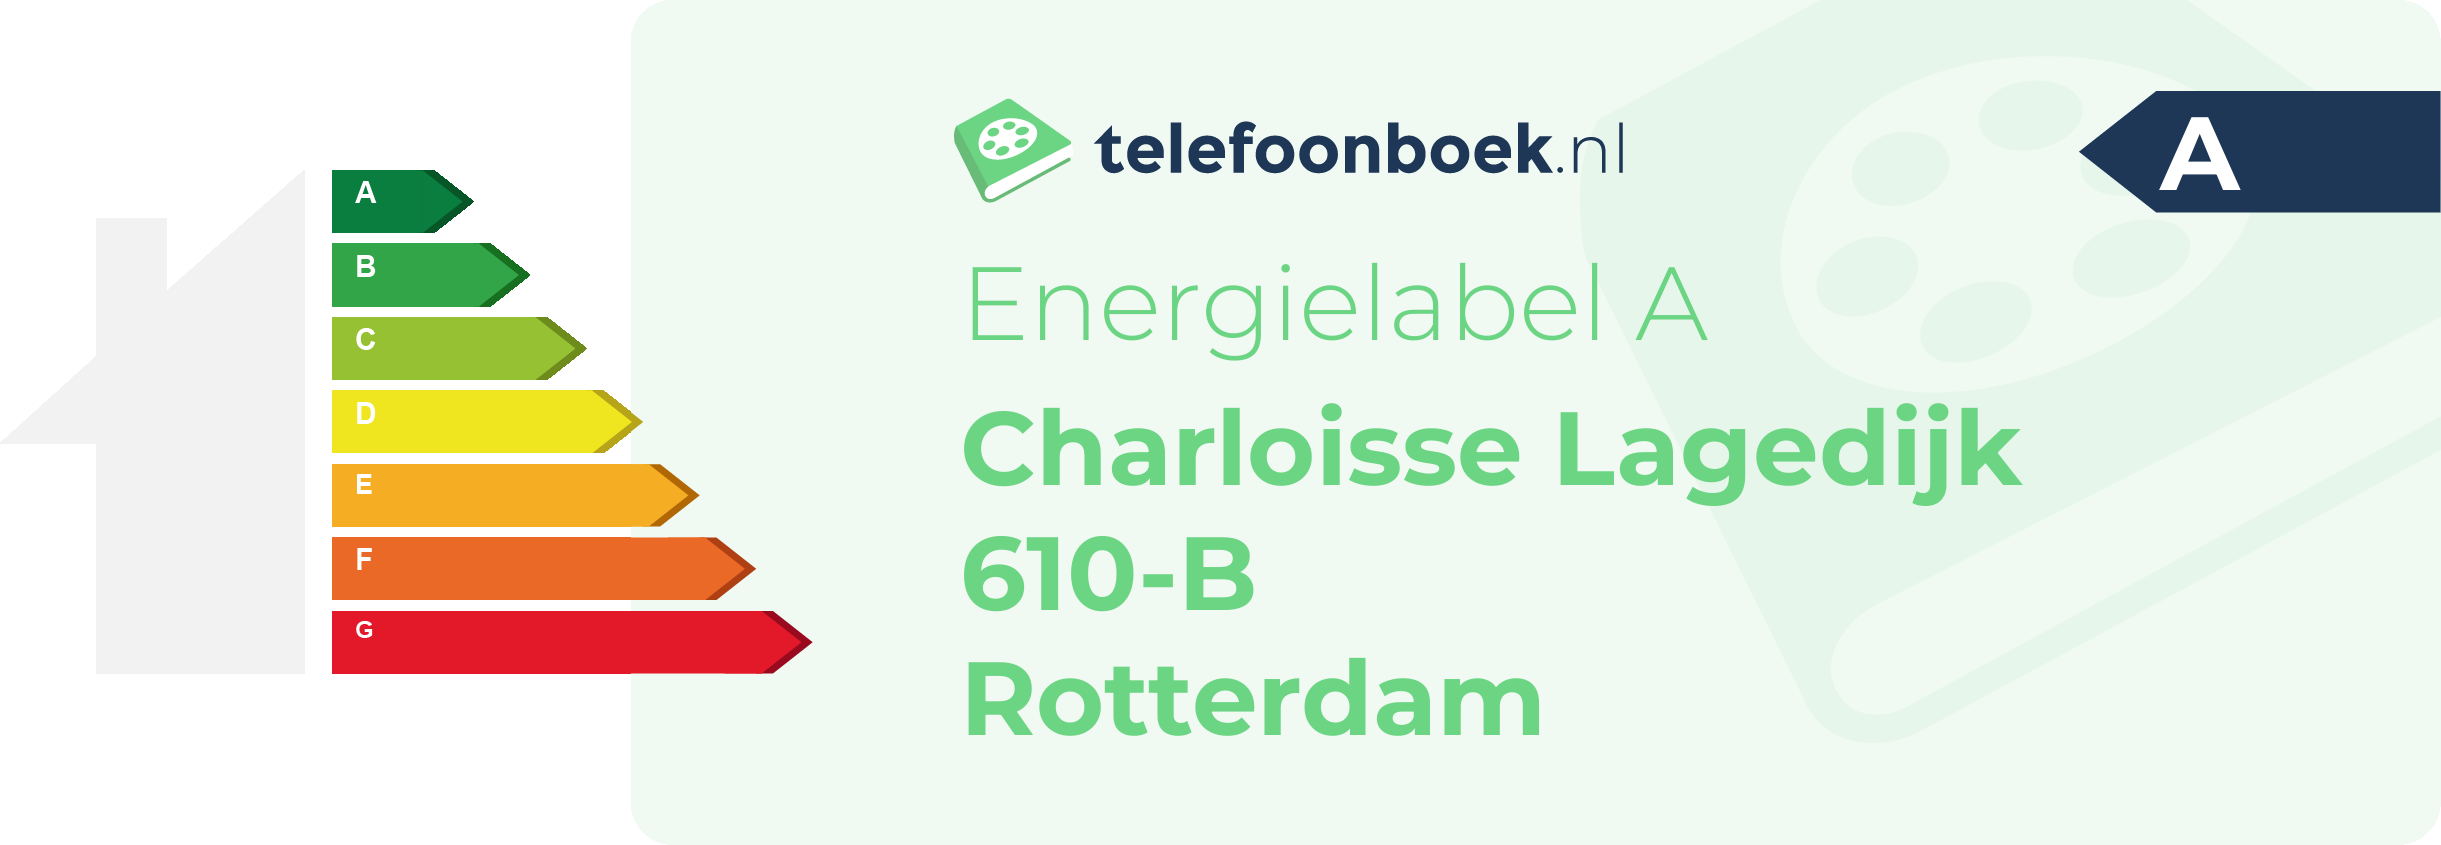 Energielabel Charloisse Lagedijk 610-B Rotterdam